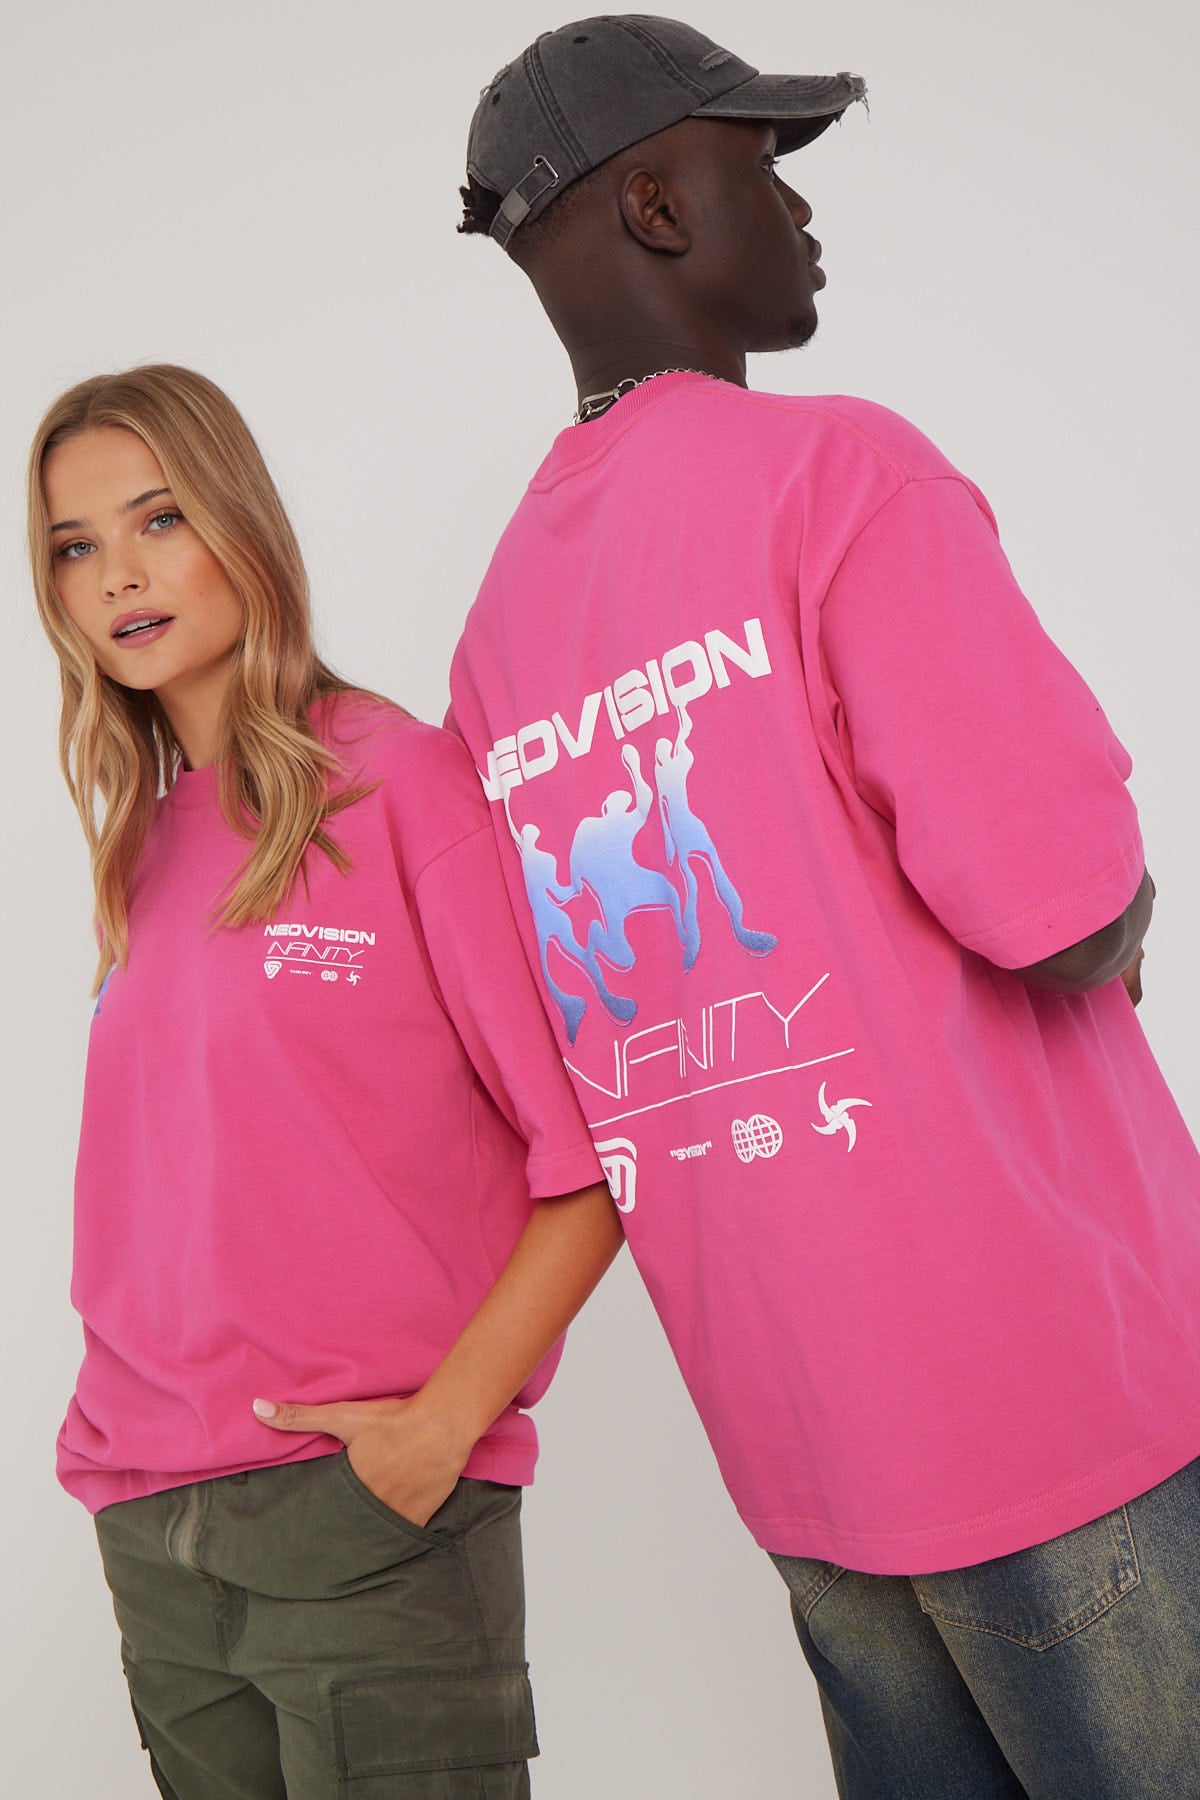 Neovision Infinity Oversize Super Heavy Tee Hot Pink – Universal Store